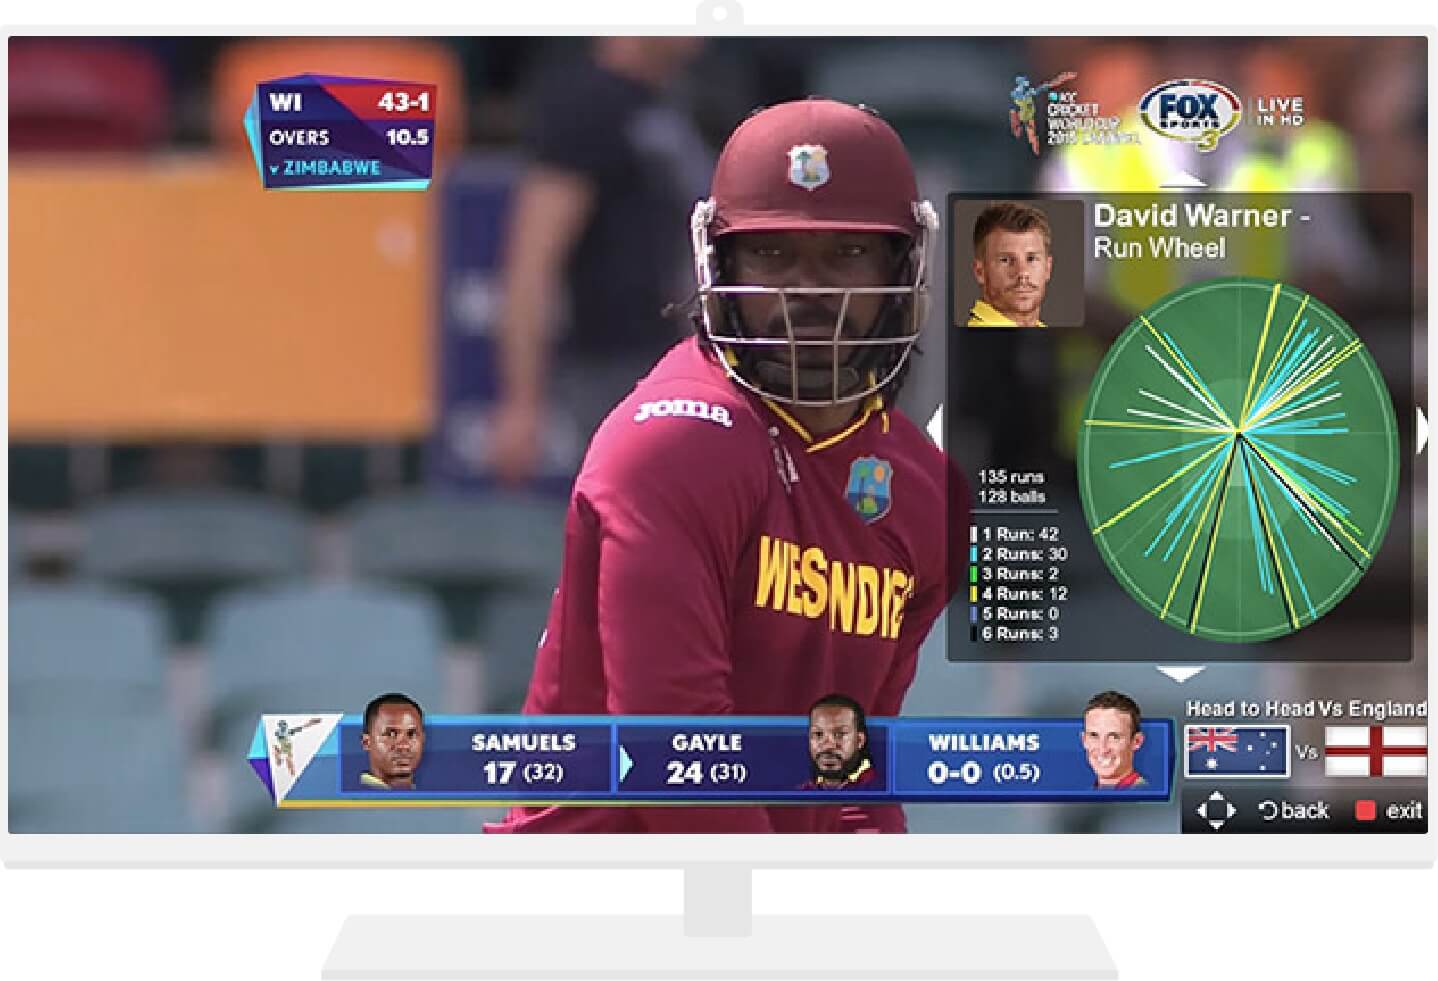 Cricket on a TV